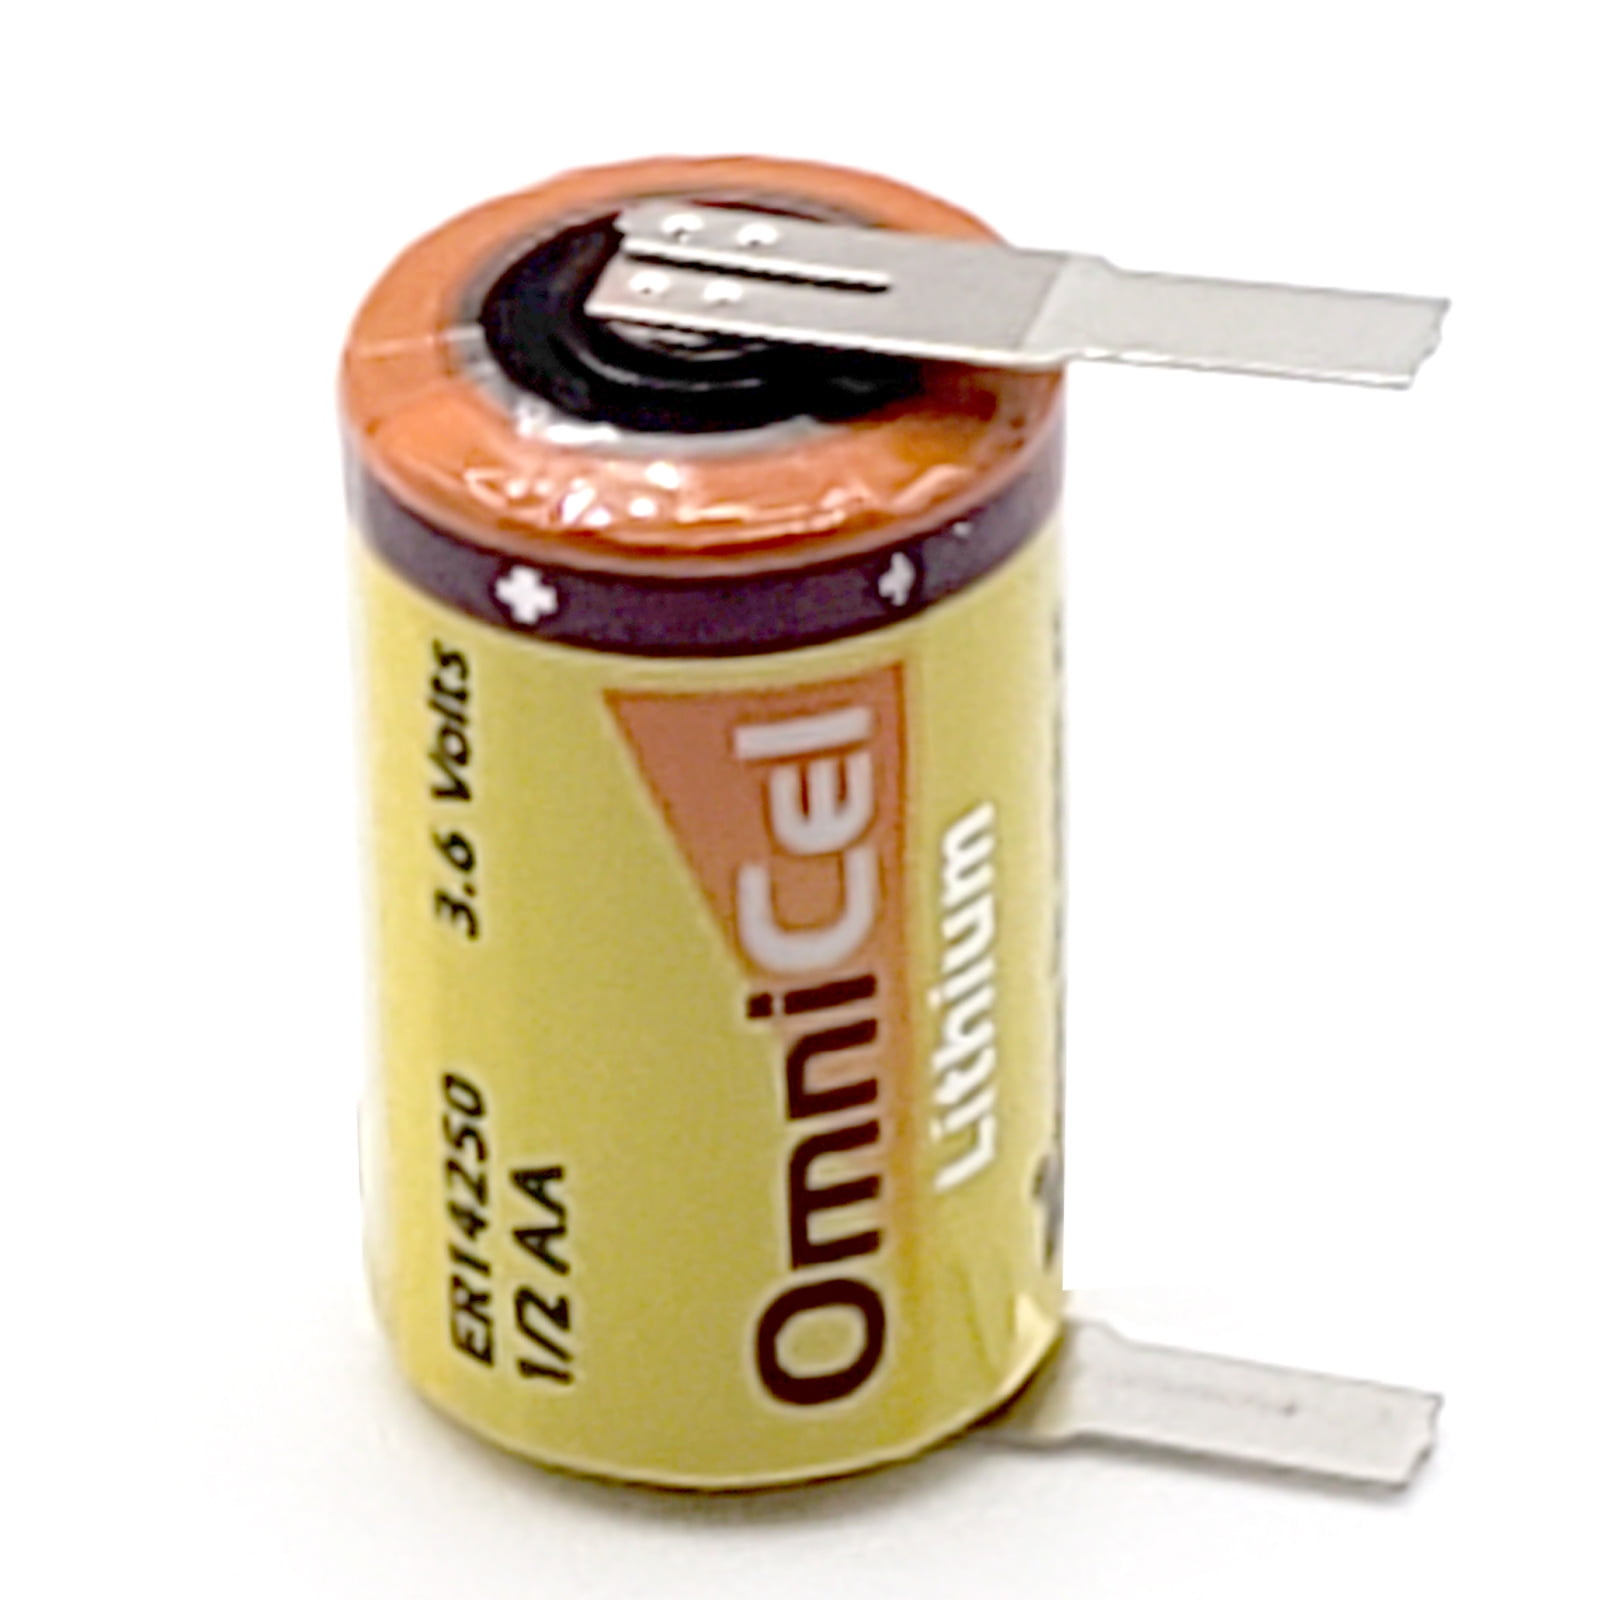 OmniCel ER34615 3.6 Volt 19 Ah D High Energy Lithium Battery with Tabs